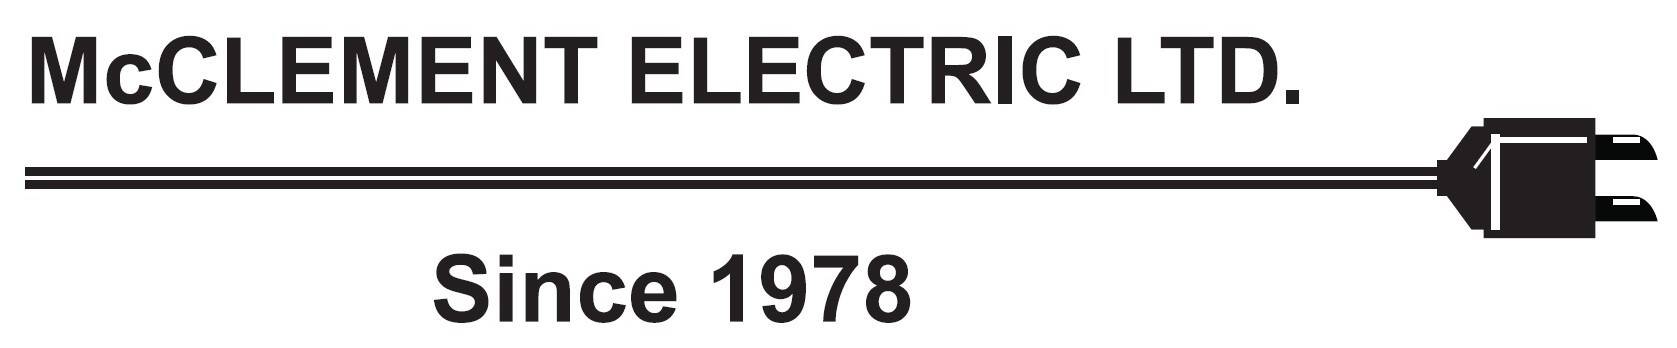 McClement Electric